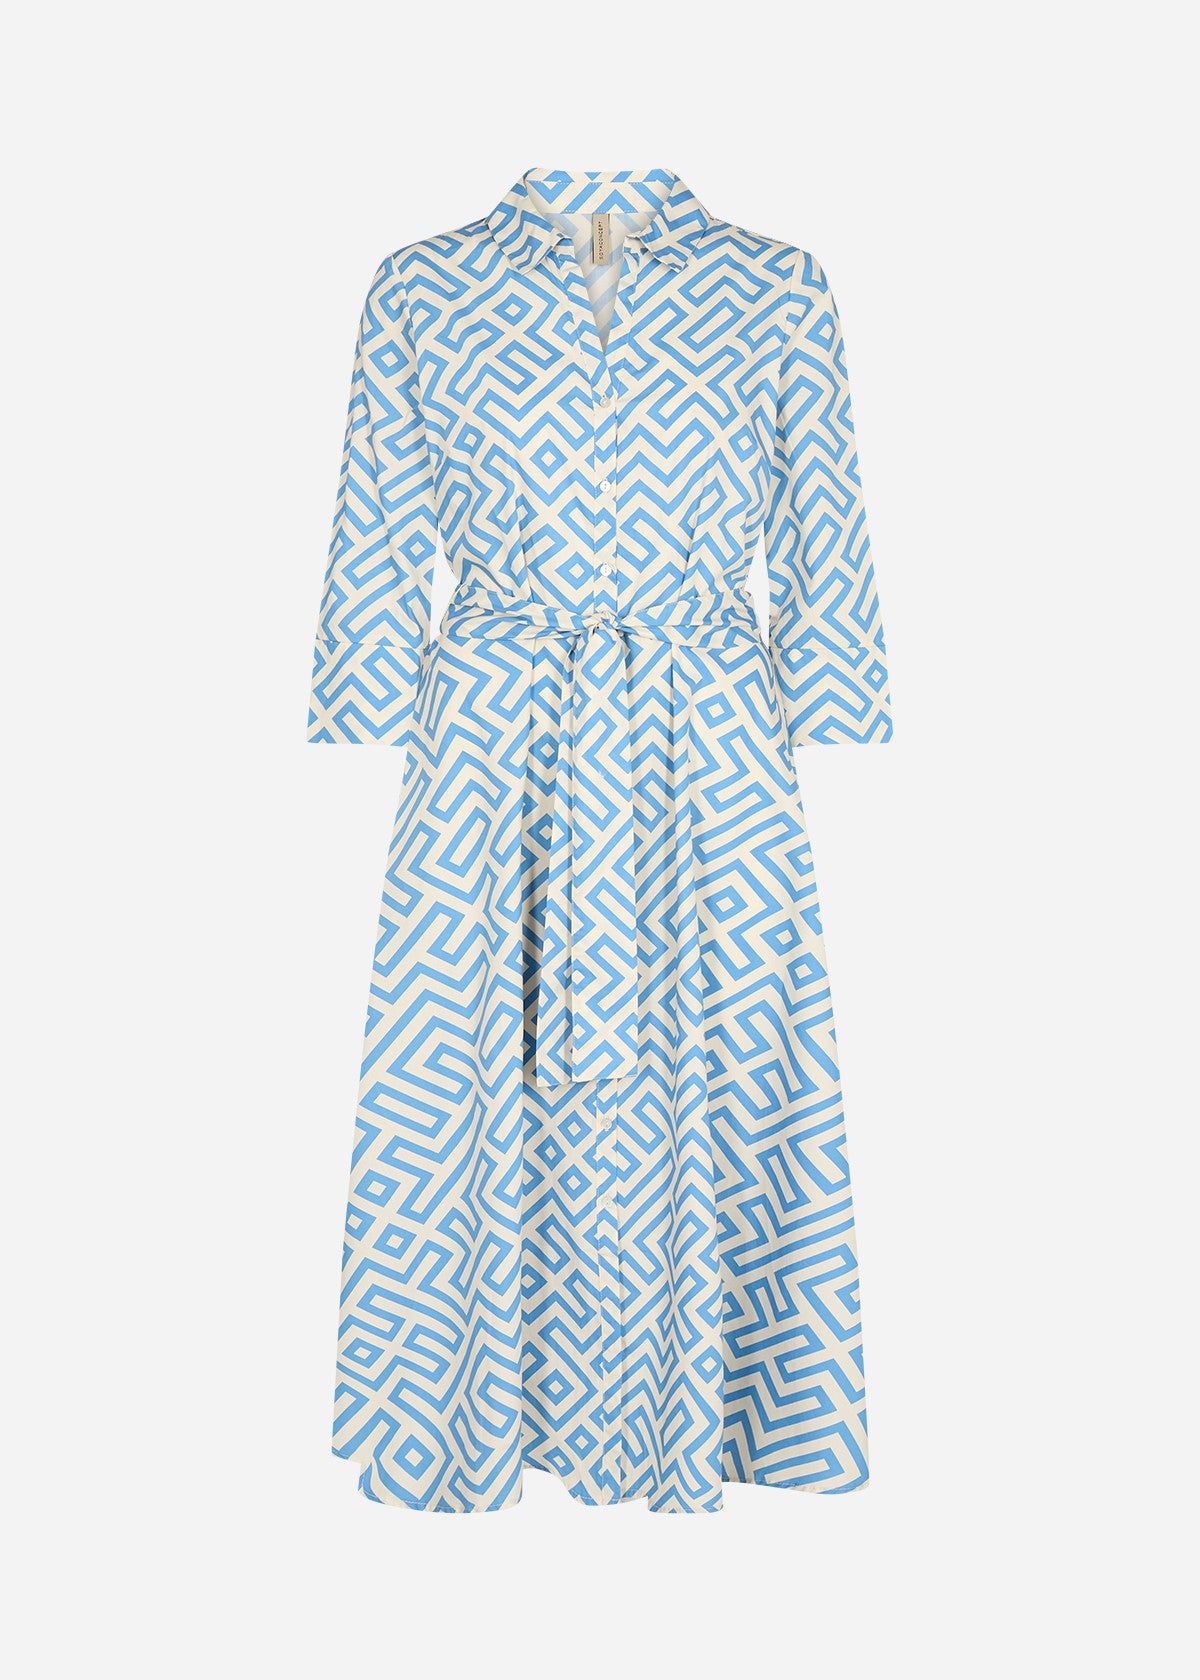 Soya Concept Graphic Print Dress Blue